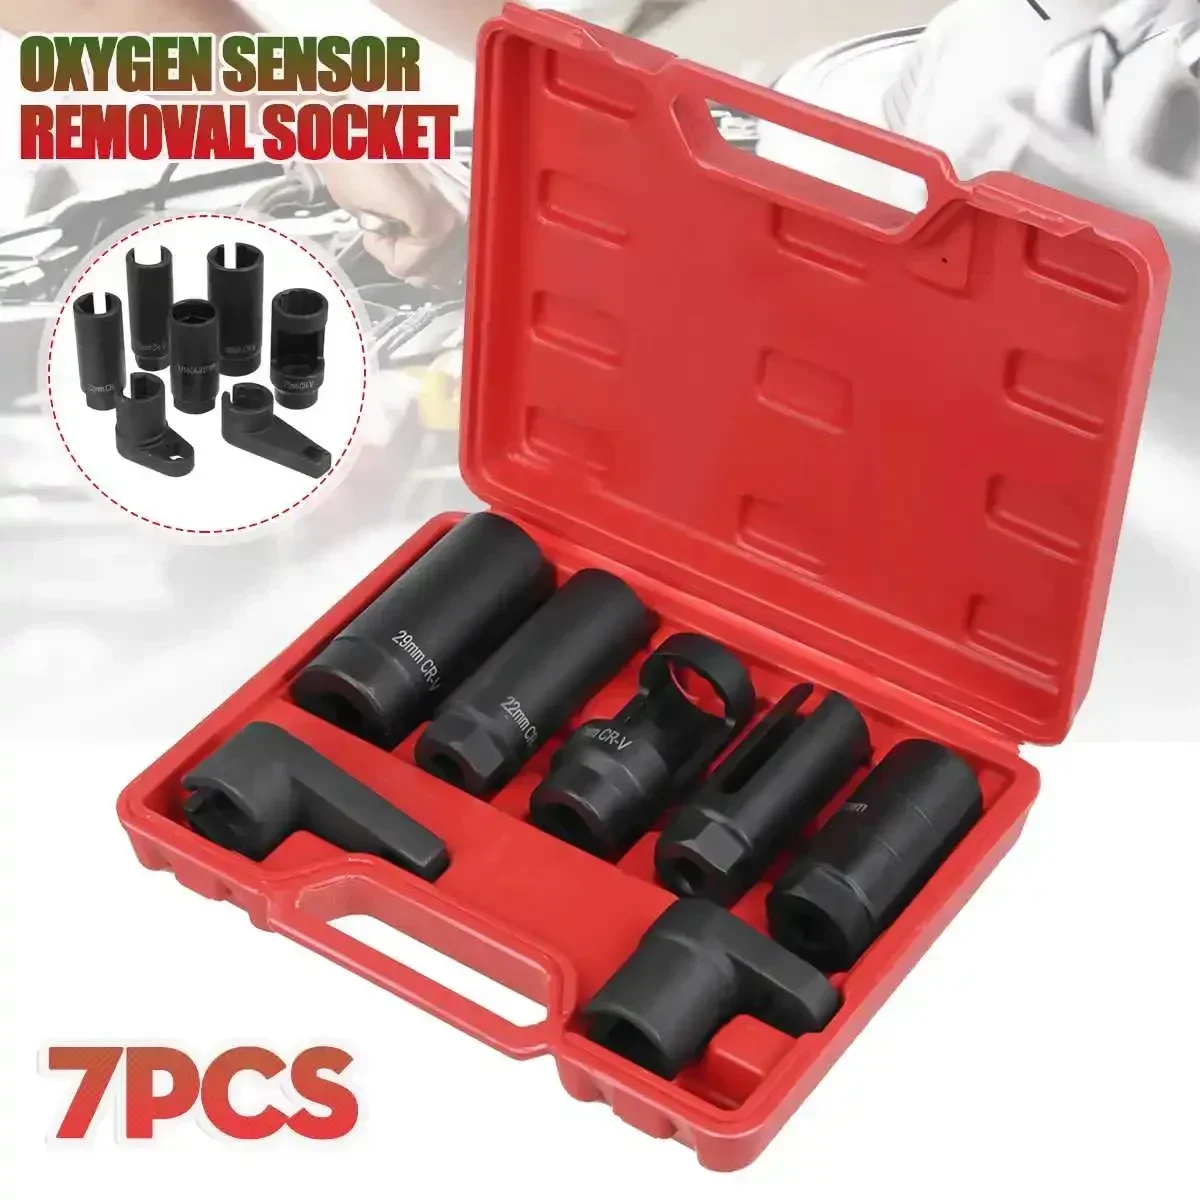 

Universal 7pcs O2 Oxygen Lambda Sensor Socket 6 Point Wrench Tool Remover Installer Set Box